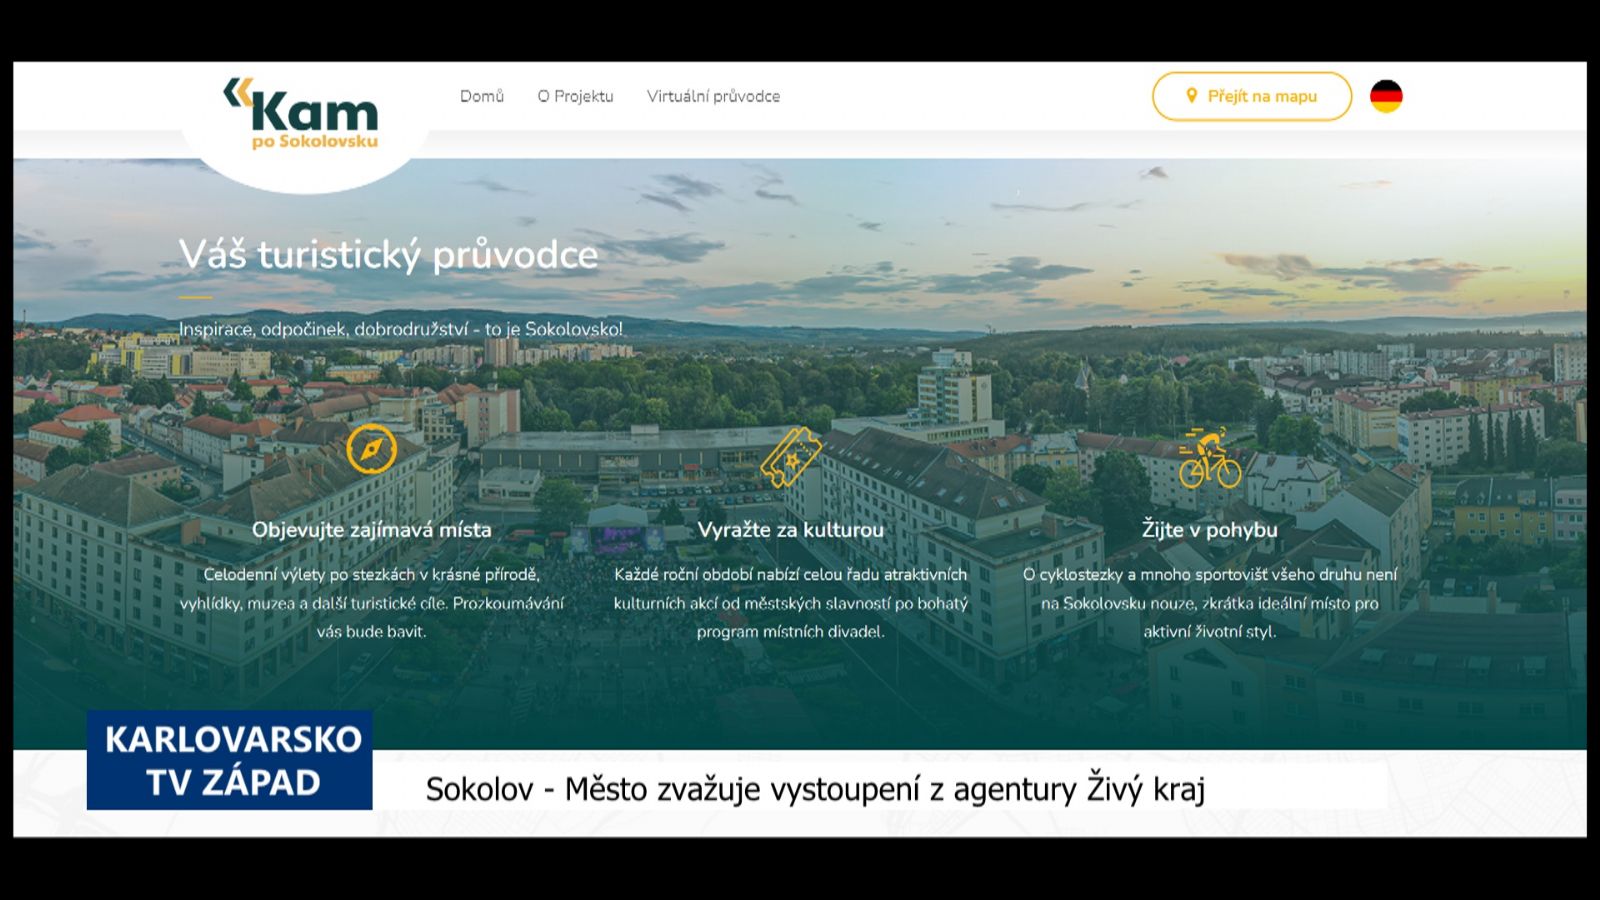 Sokolov: Město zvažuje vystoupení z agentury Živý kraj (TV Západ)